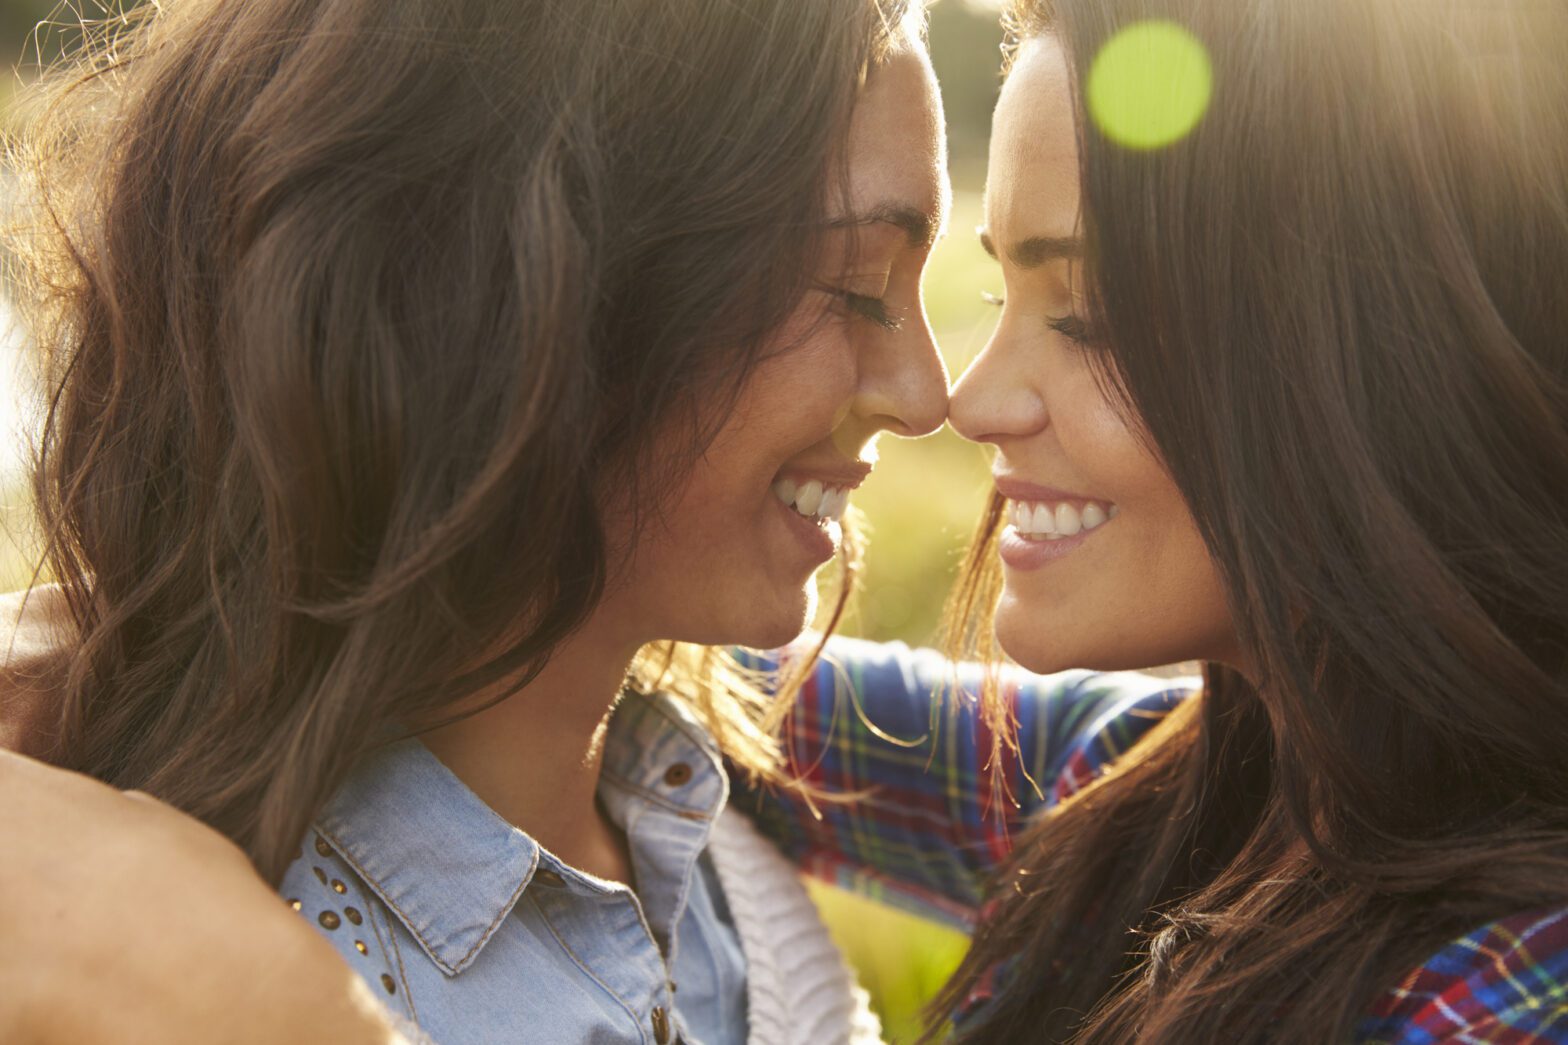 Lesbian couple embrace touching noses, eyes closed, close up